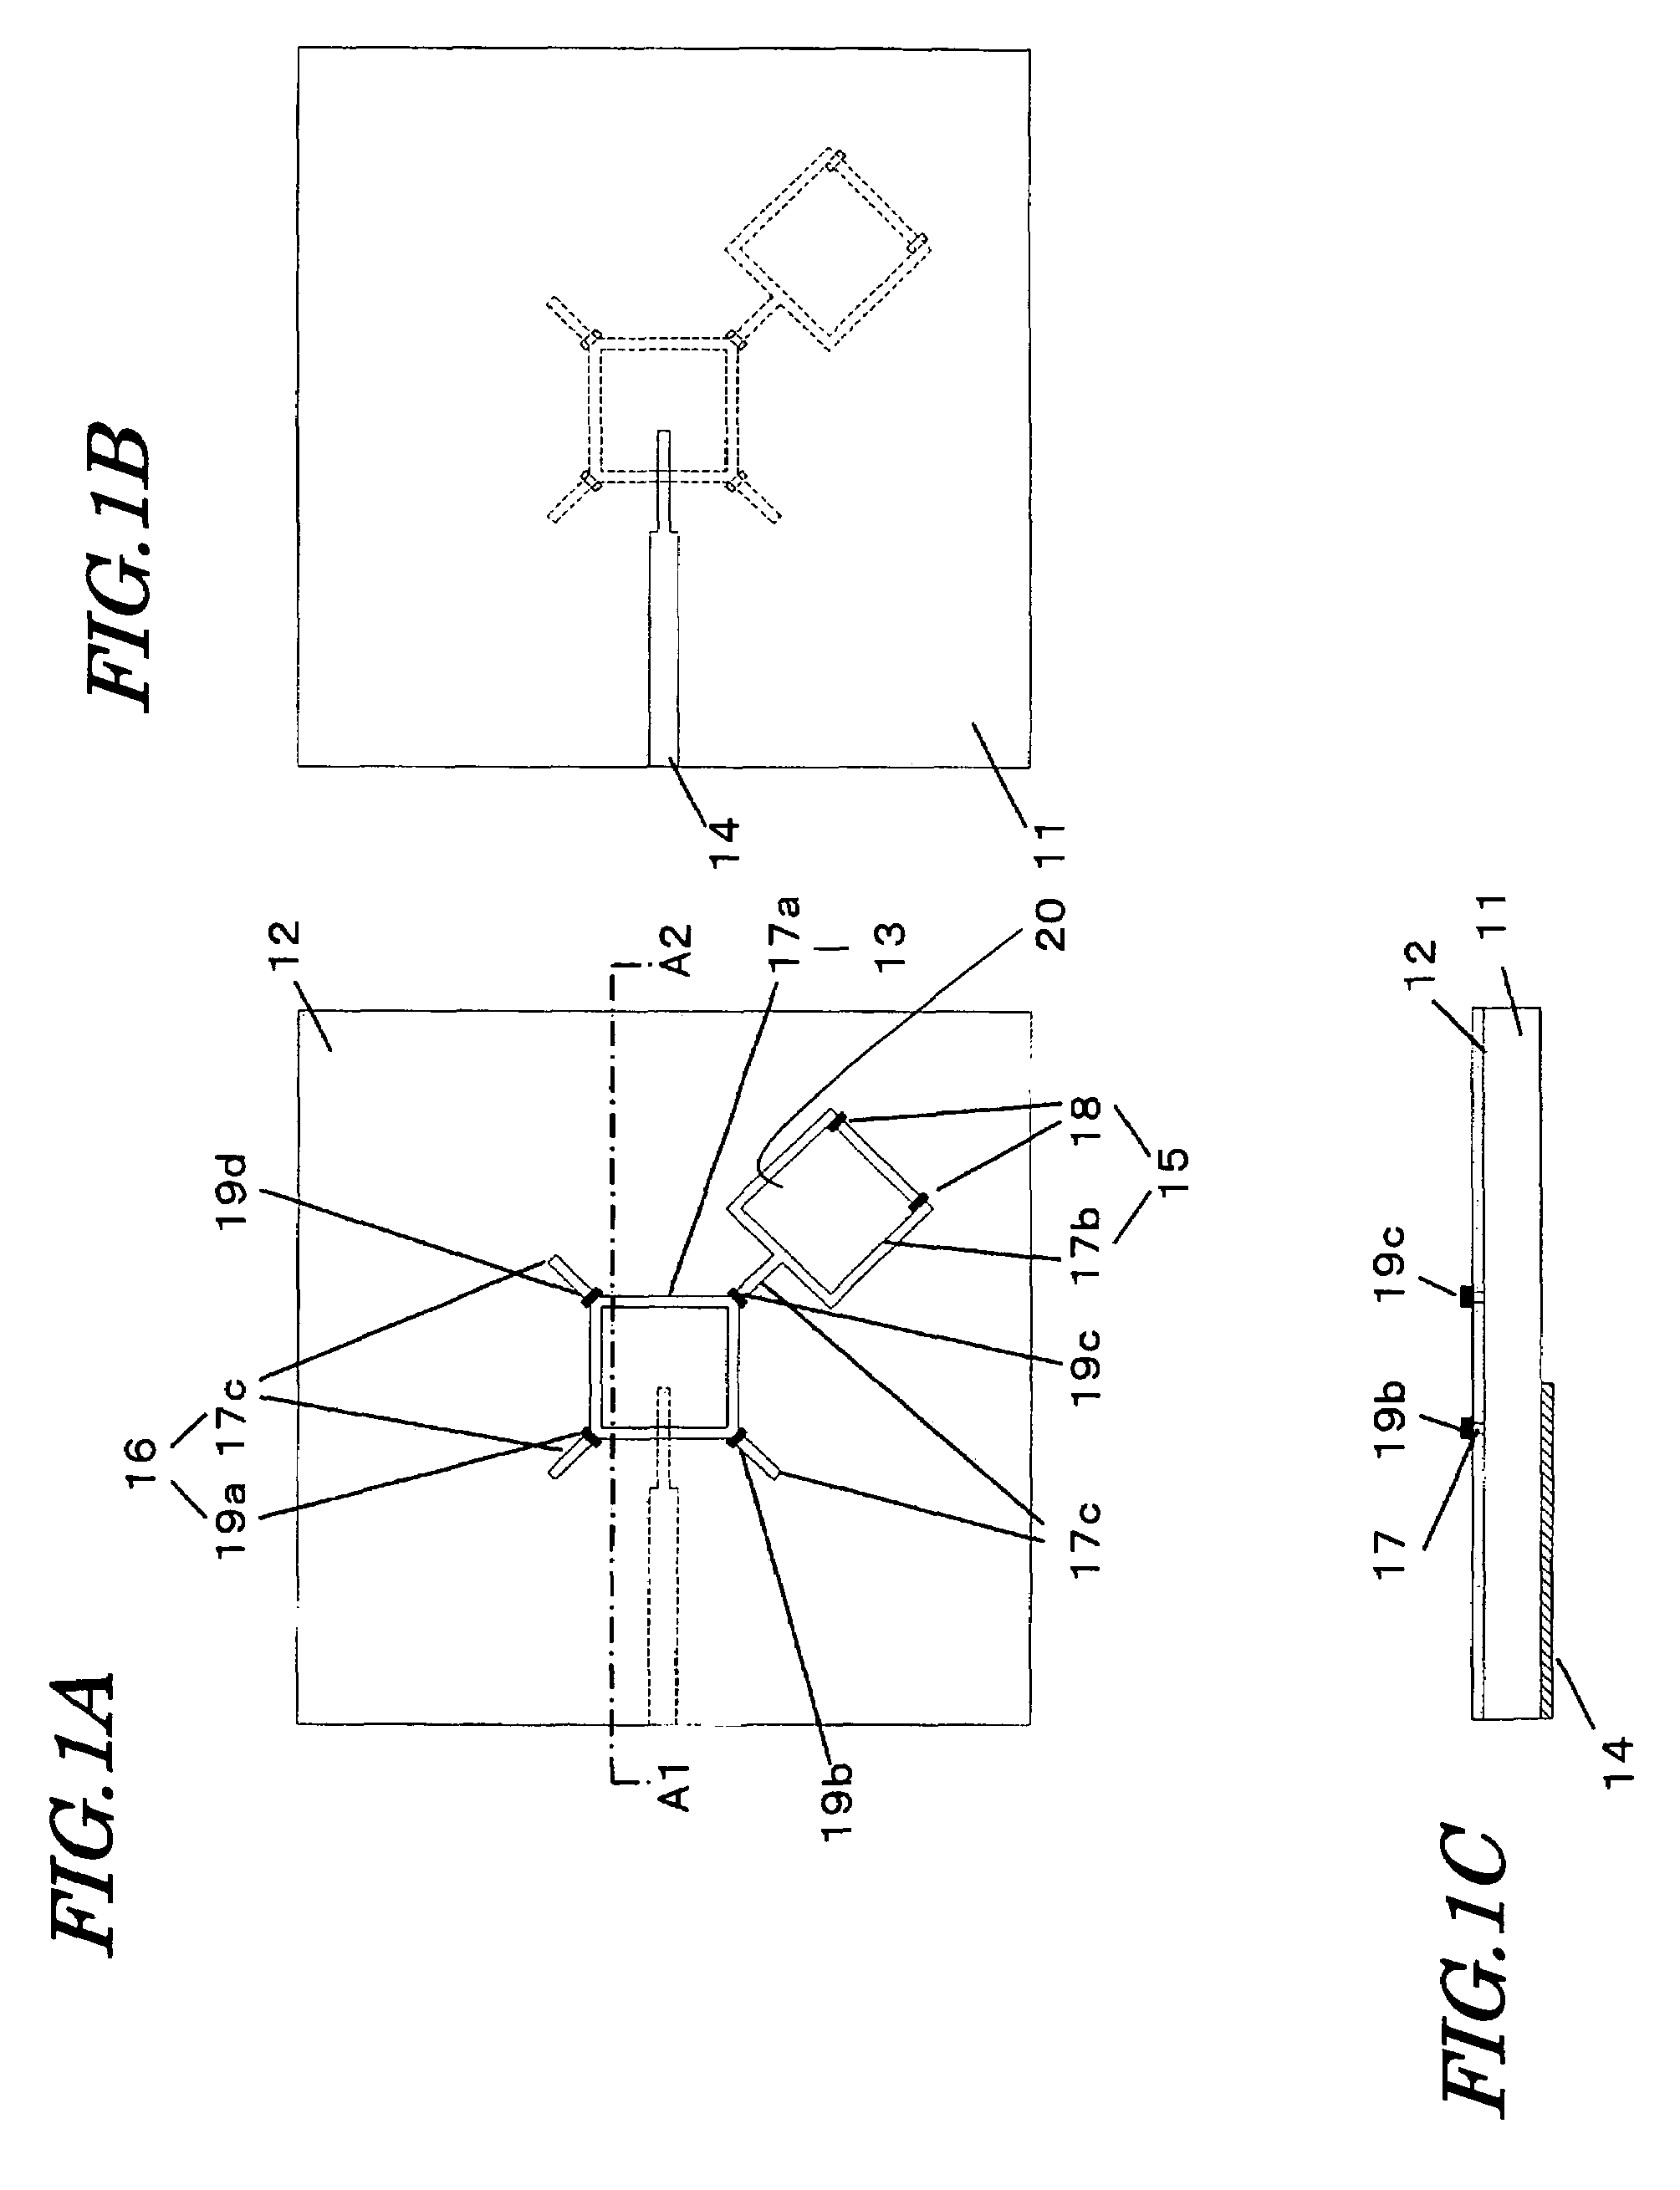 Polarization switching/variable directivity antenna